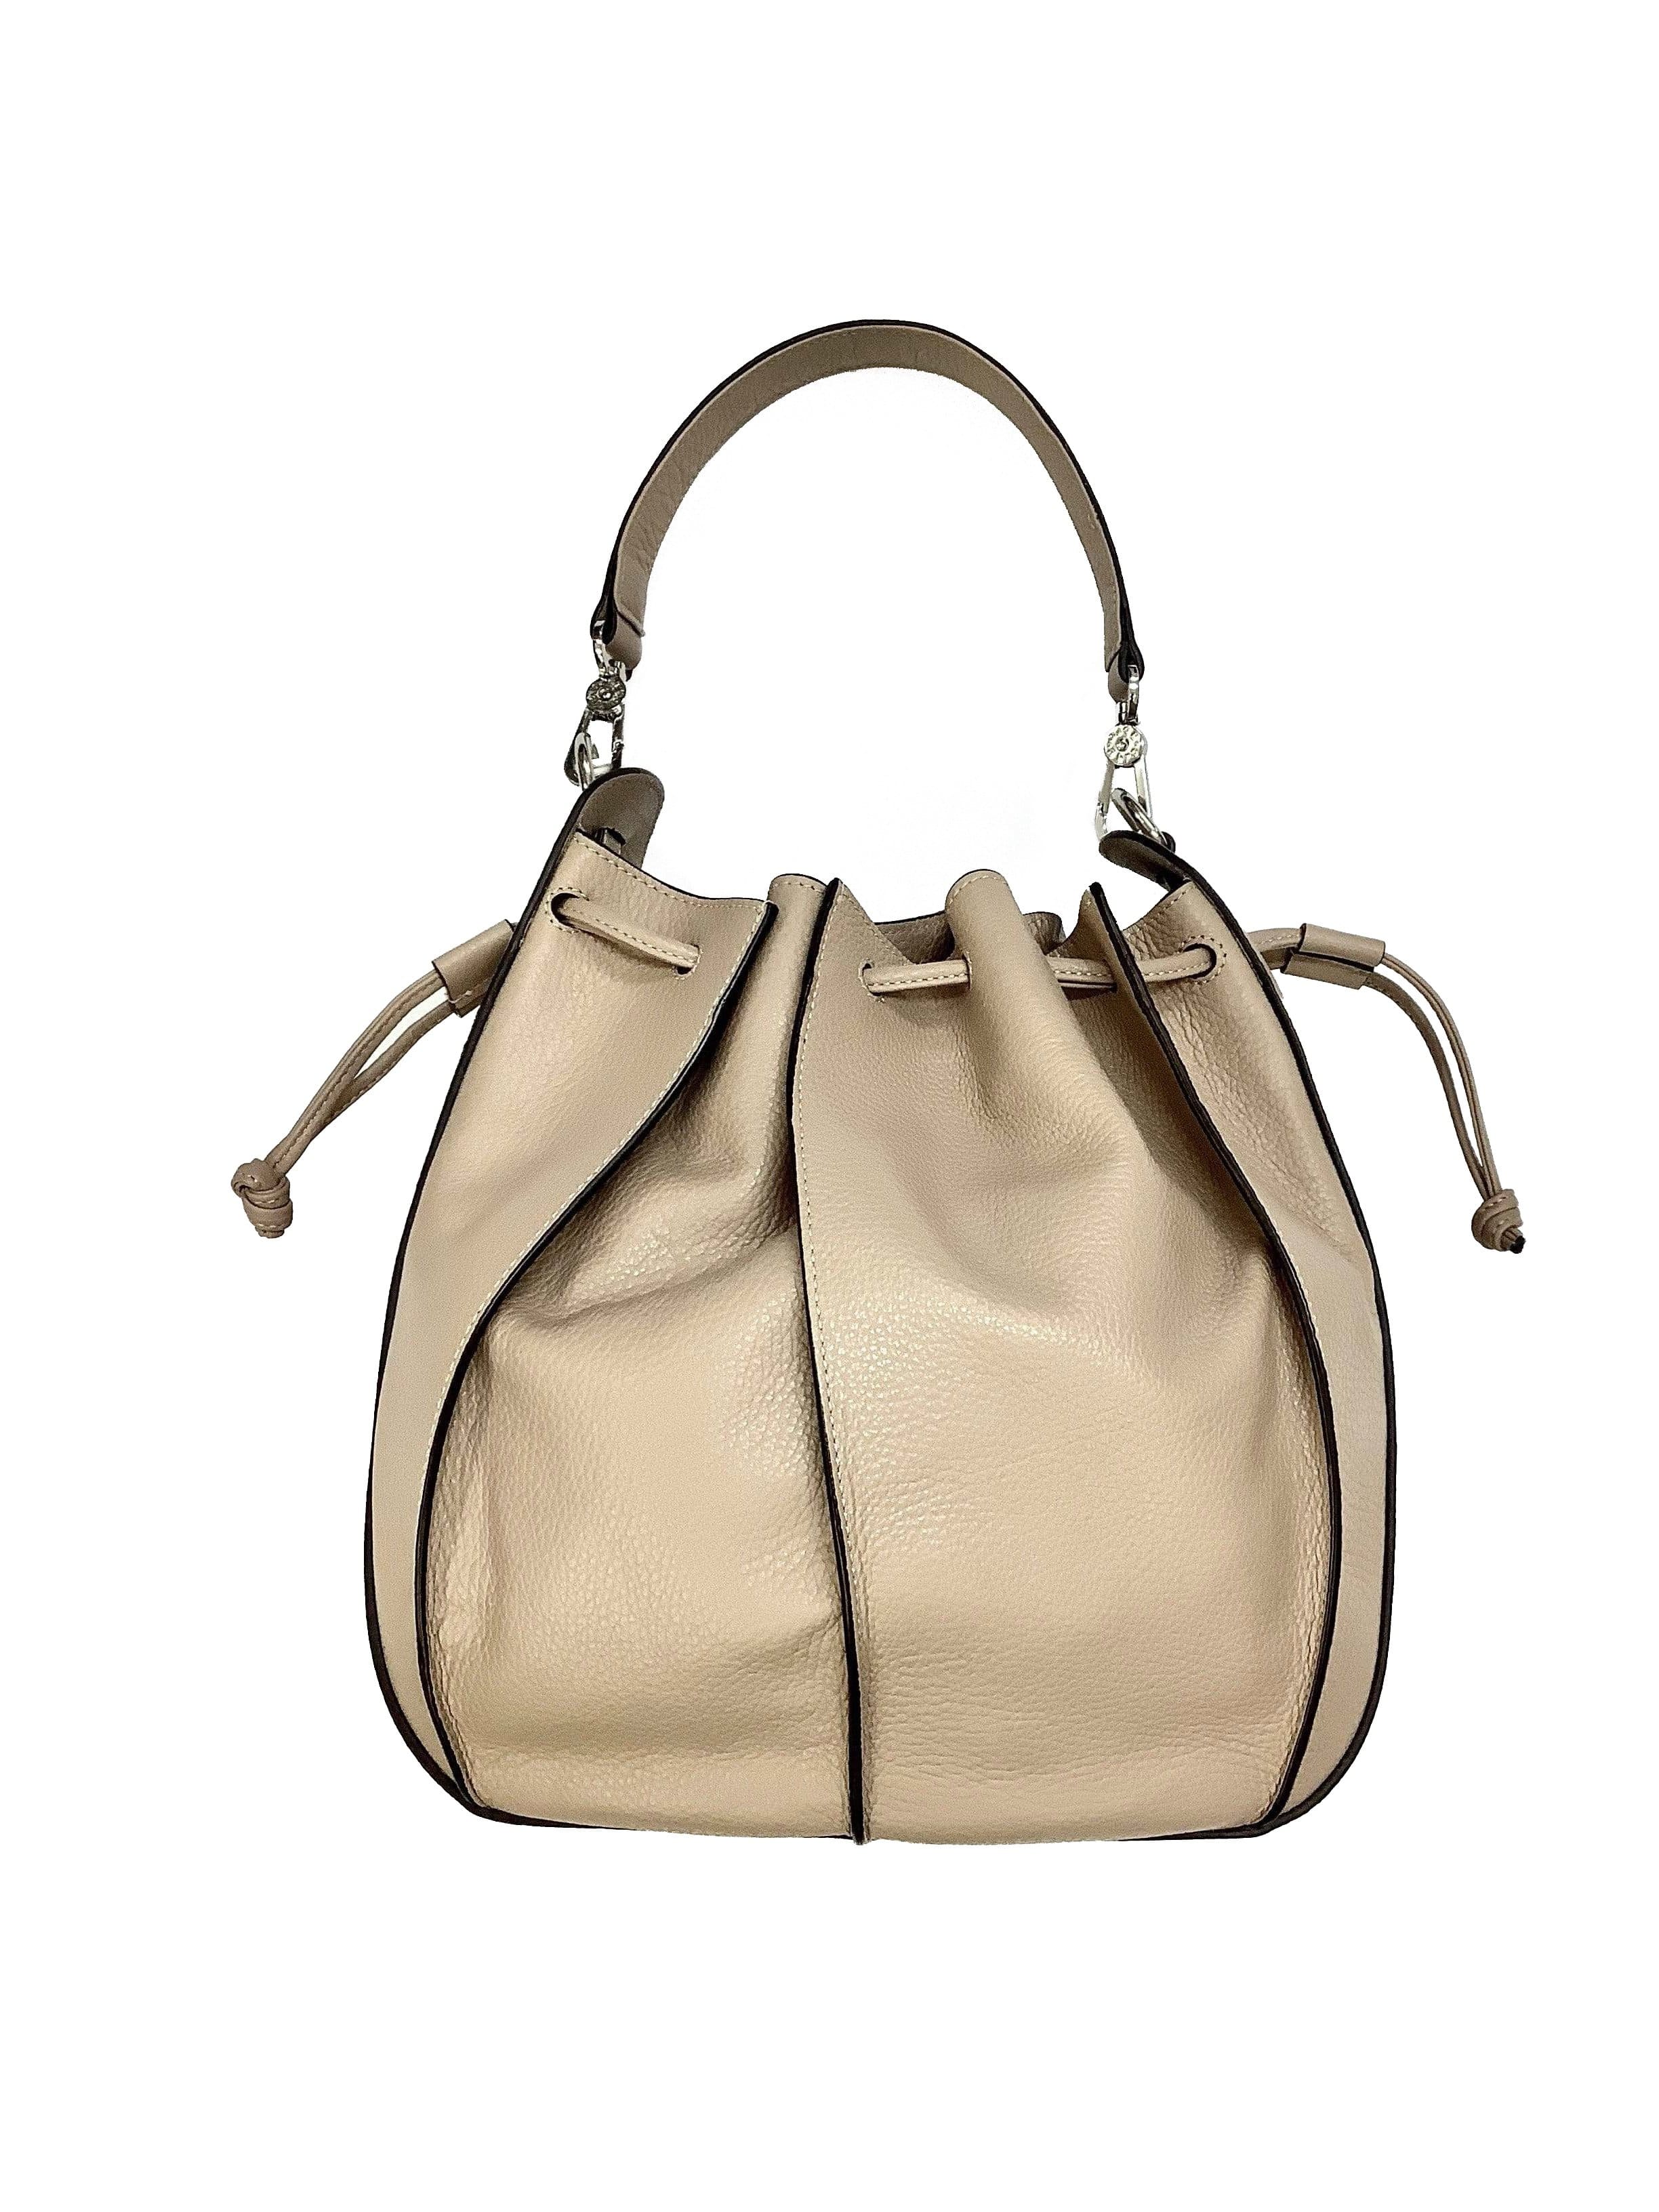 abro Handbags 1 Abro Taupe Leather Hand Bag 28385 37 S izzi-of-baslow